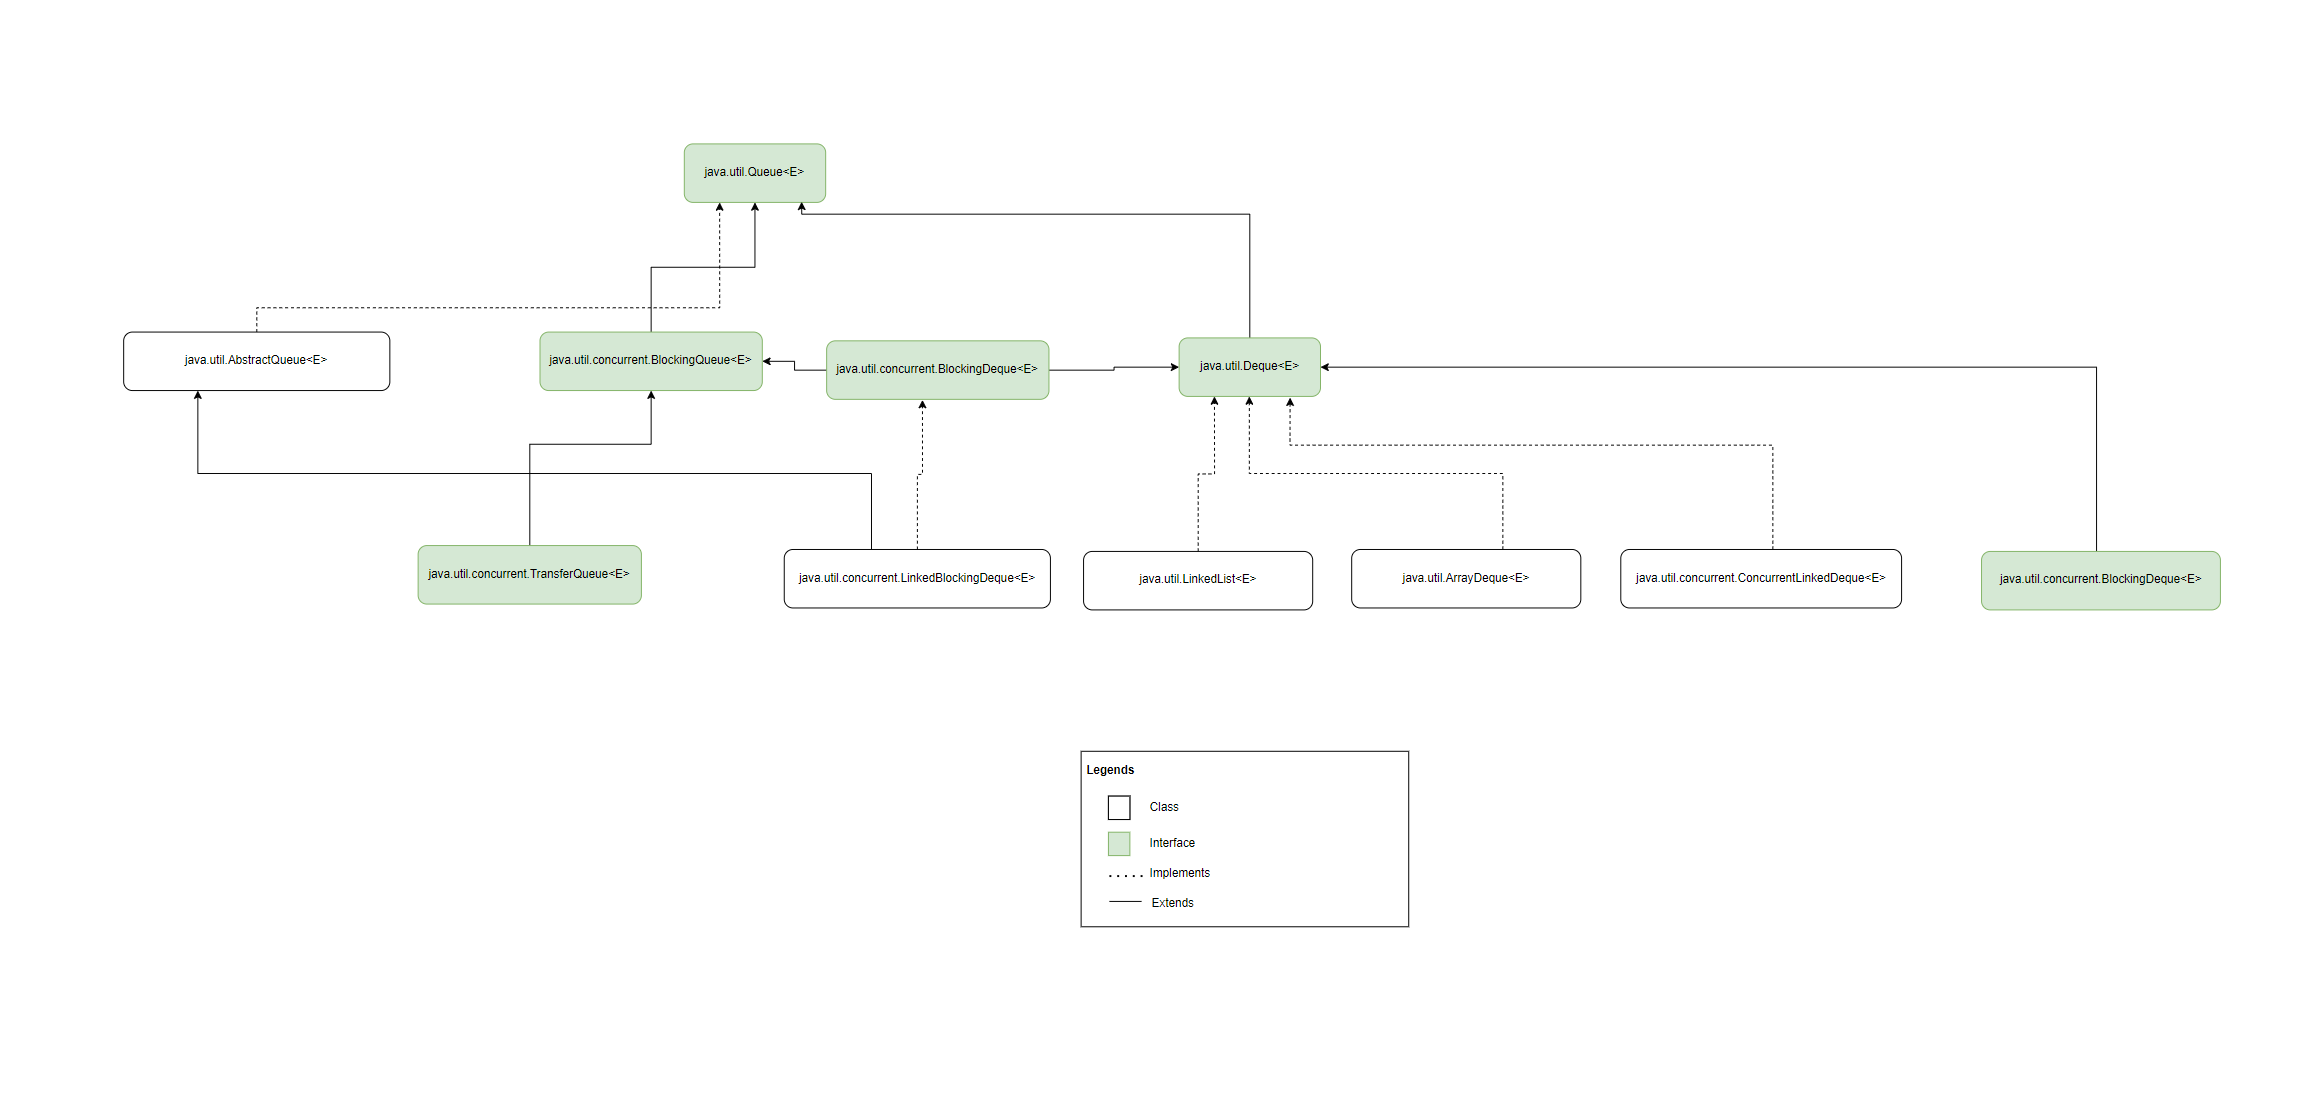 The java Queue interface family tree